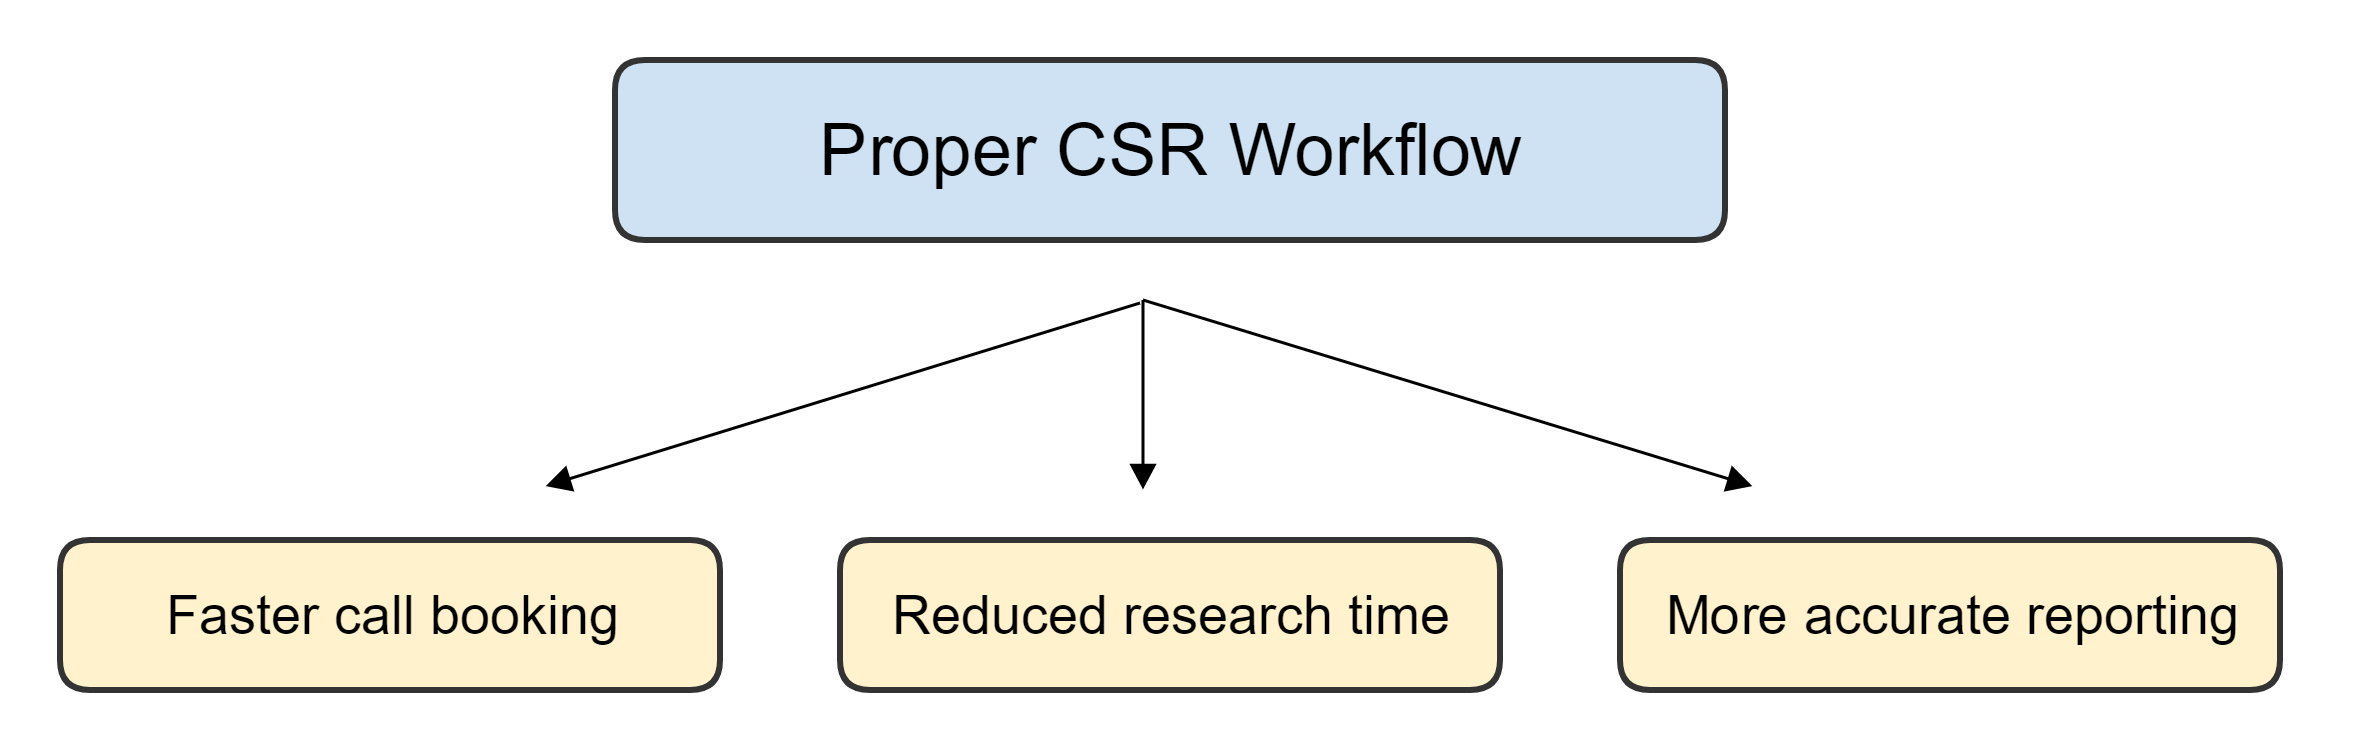 csr-workflow.png